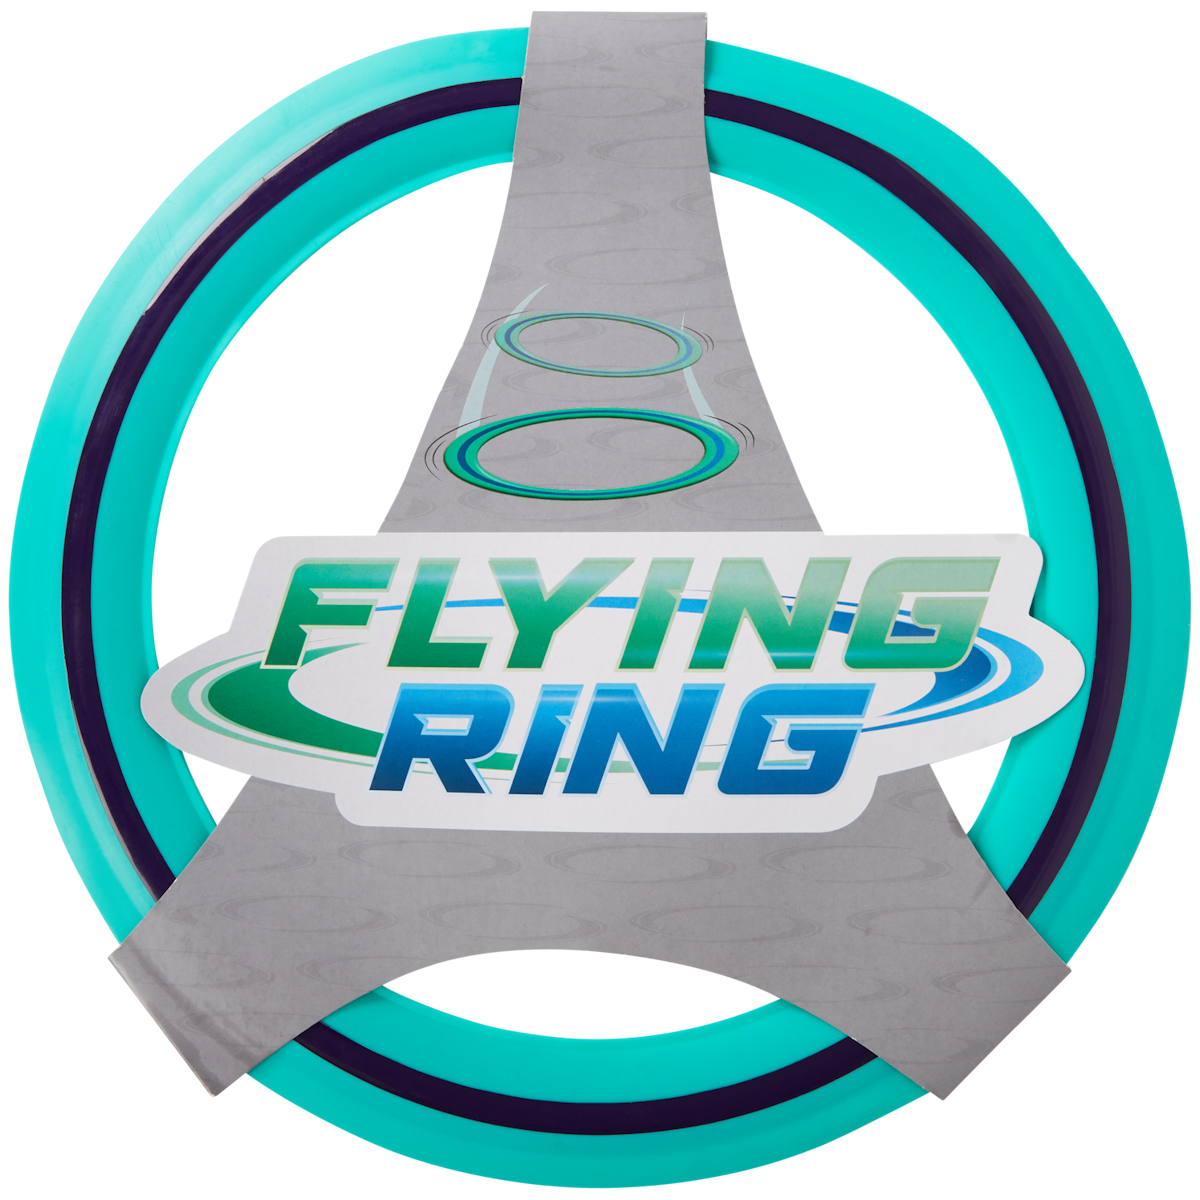 Flying Ring frisbee